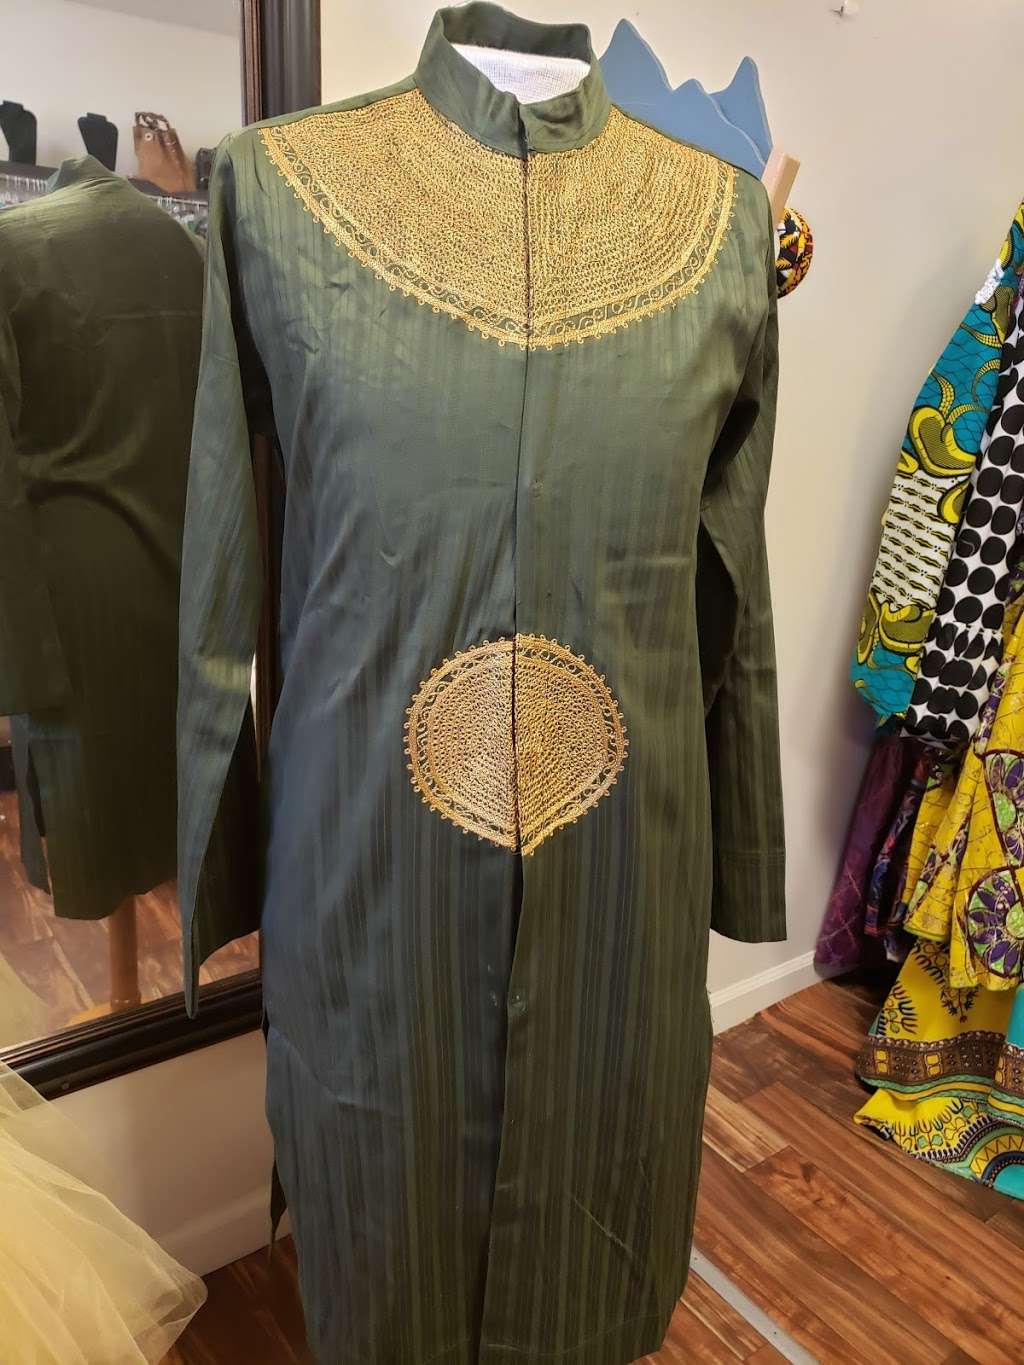 Koubix Fabrics & Ethnic Outfits | 1623 N Tryon St, Charlotte, NC 28206 | Phone: (980) 333-4462